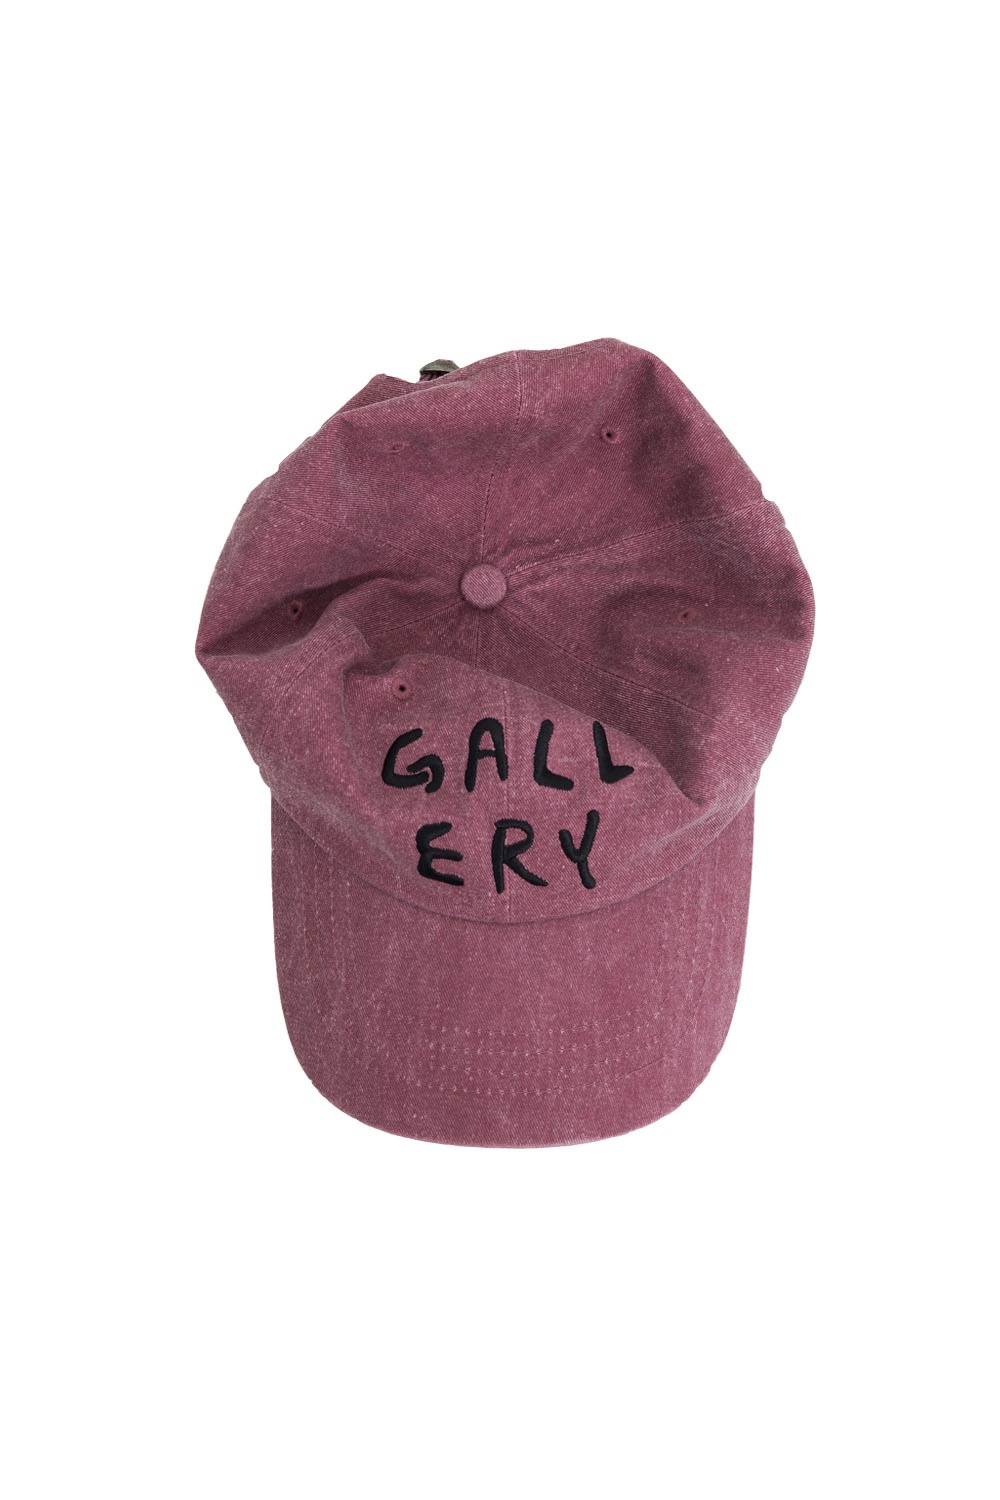 Gallery Pigment Ball Cap